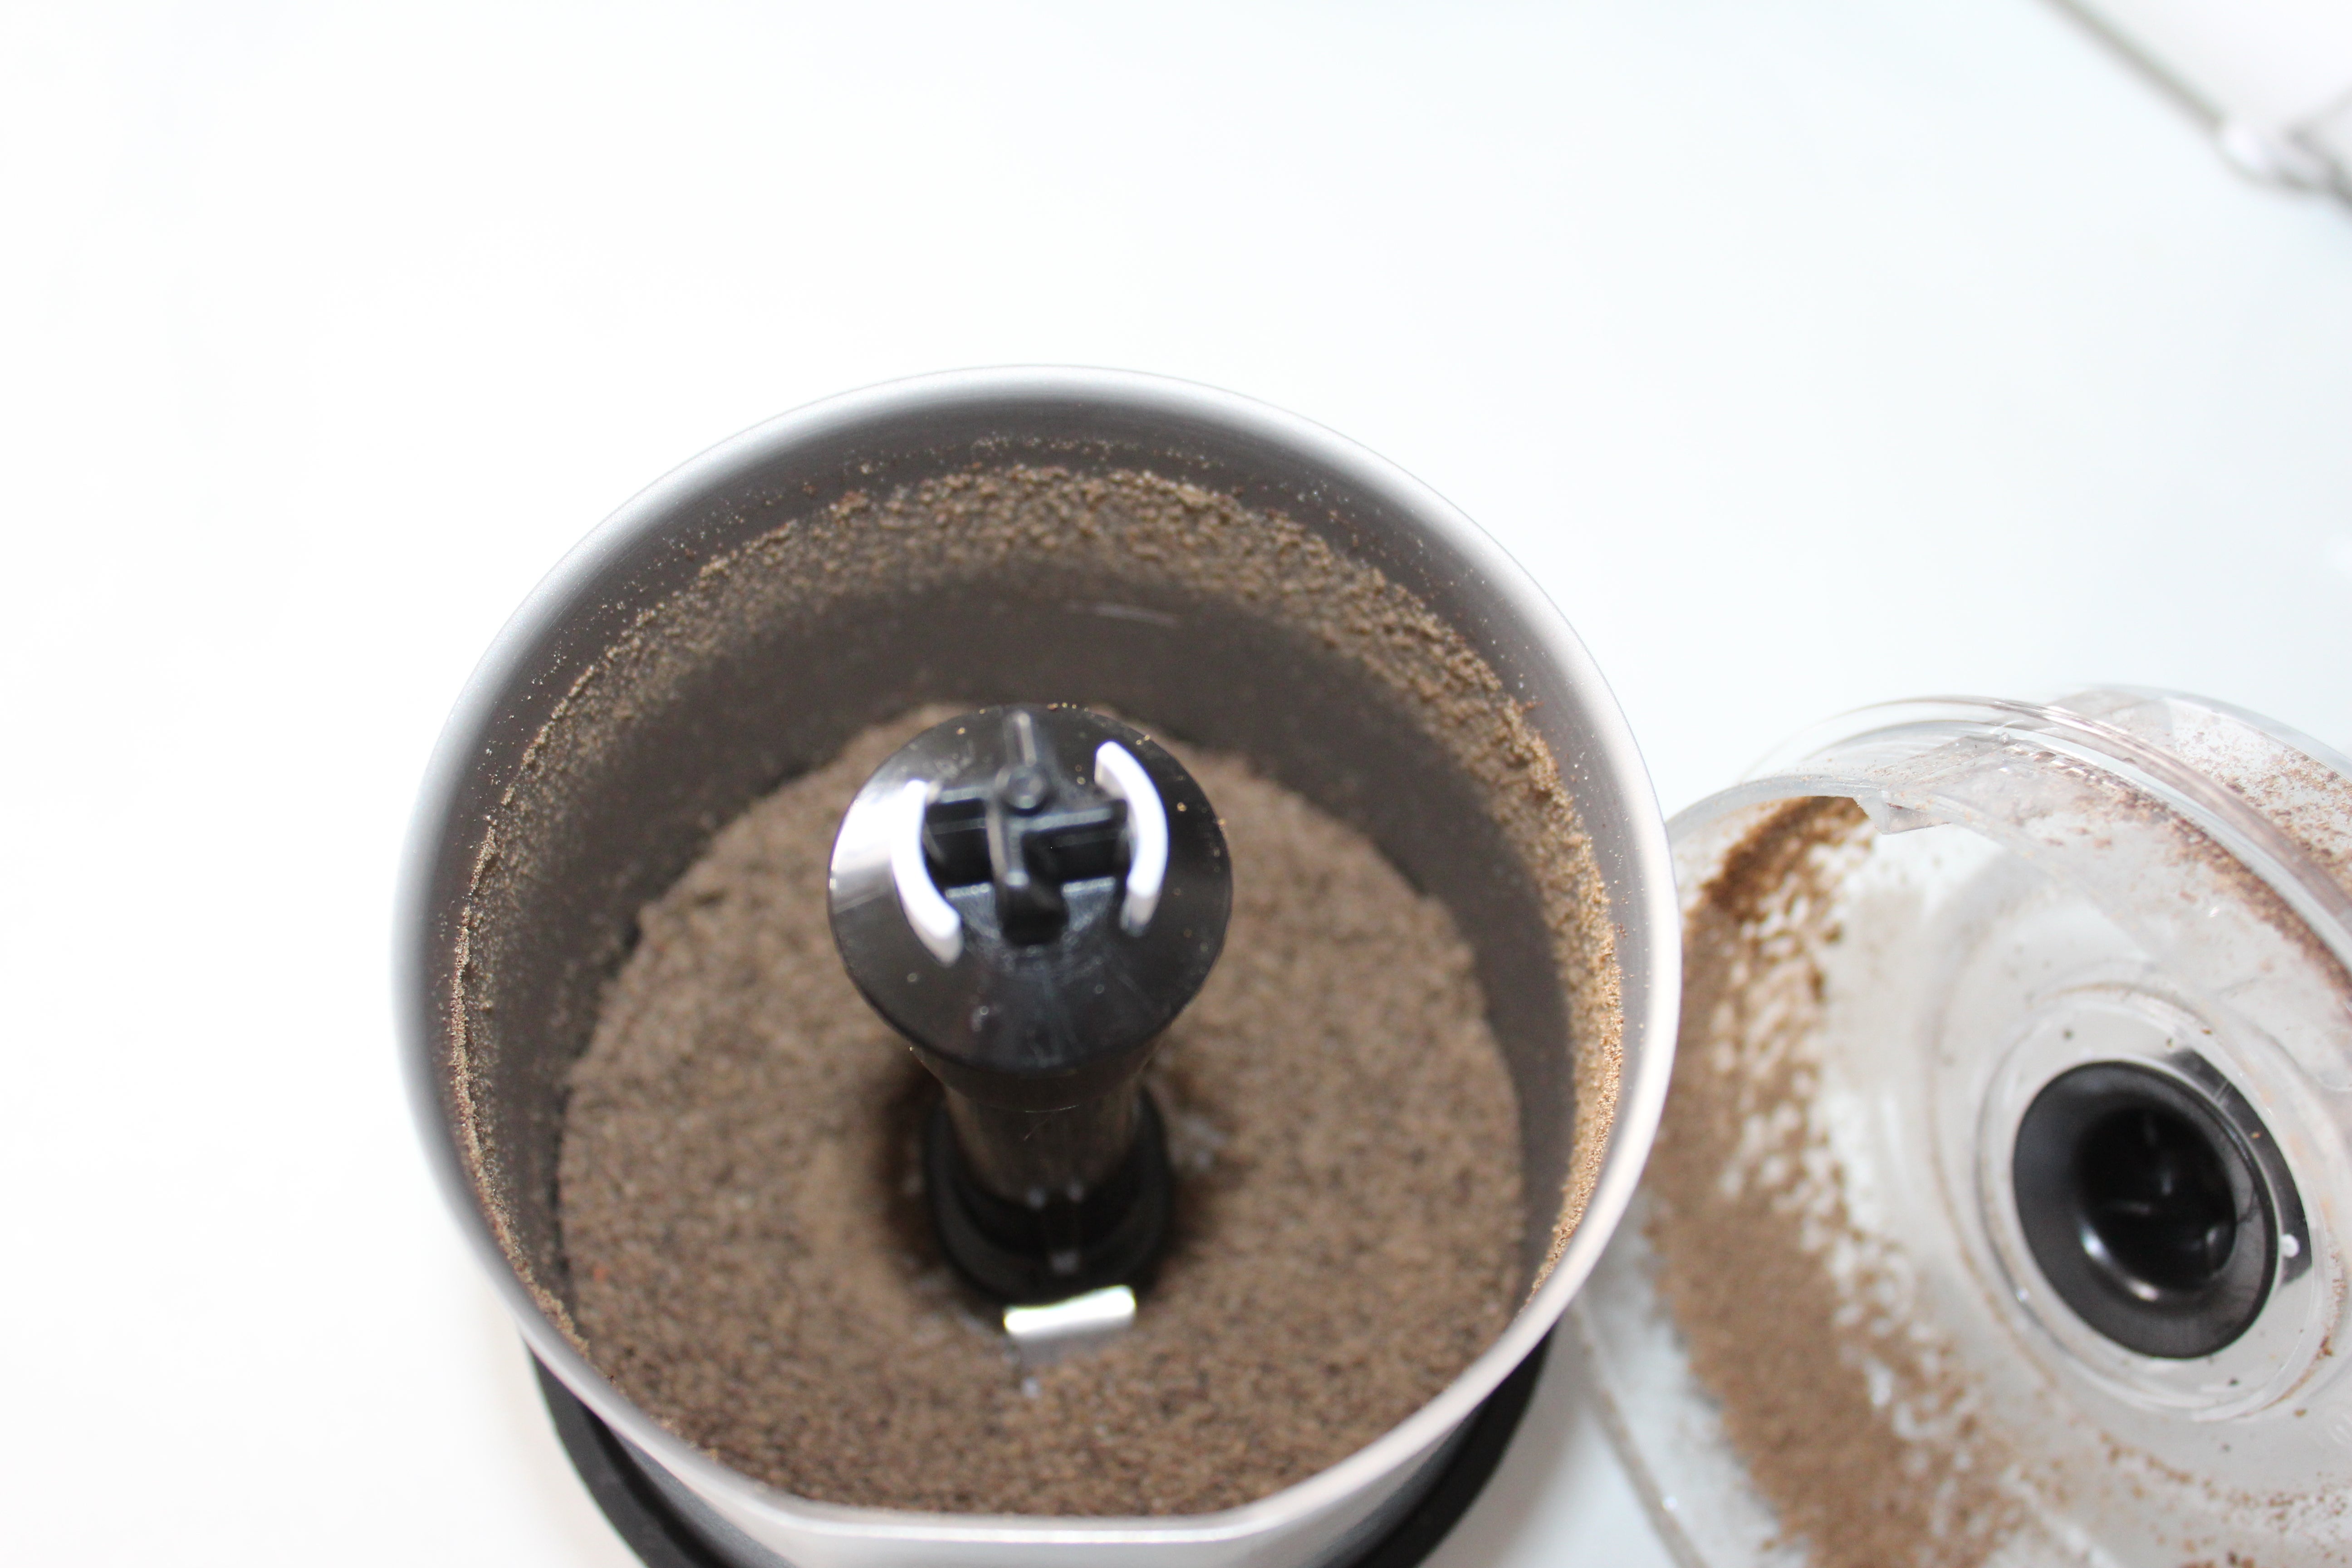 Braun MultiQuick Spice grinder with ground spices inside.